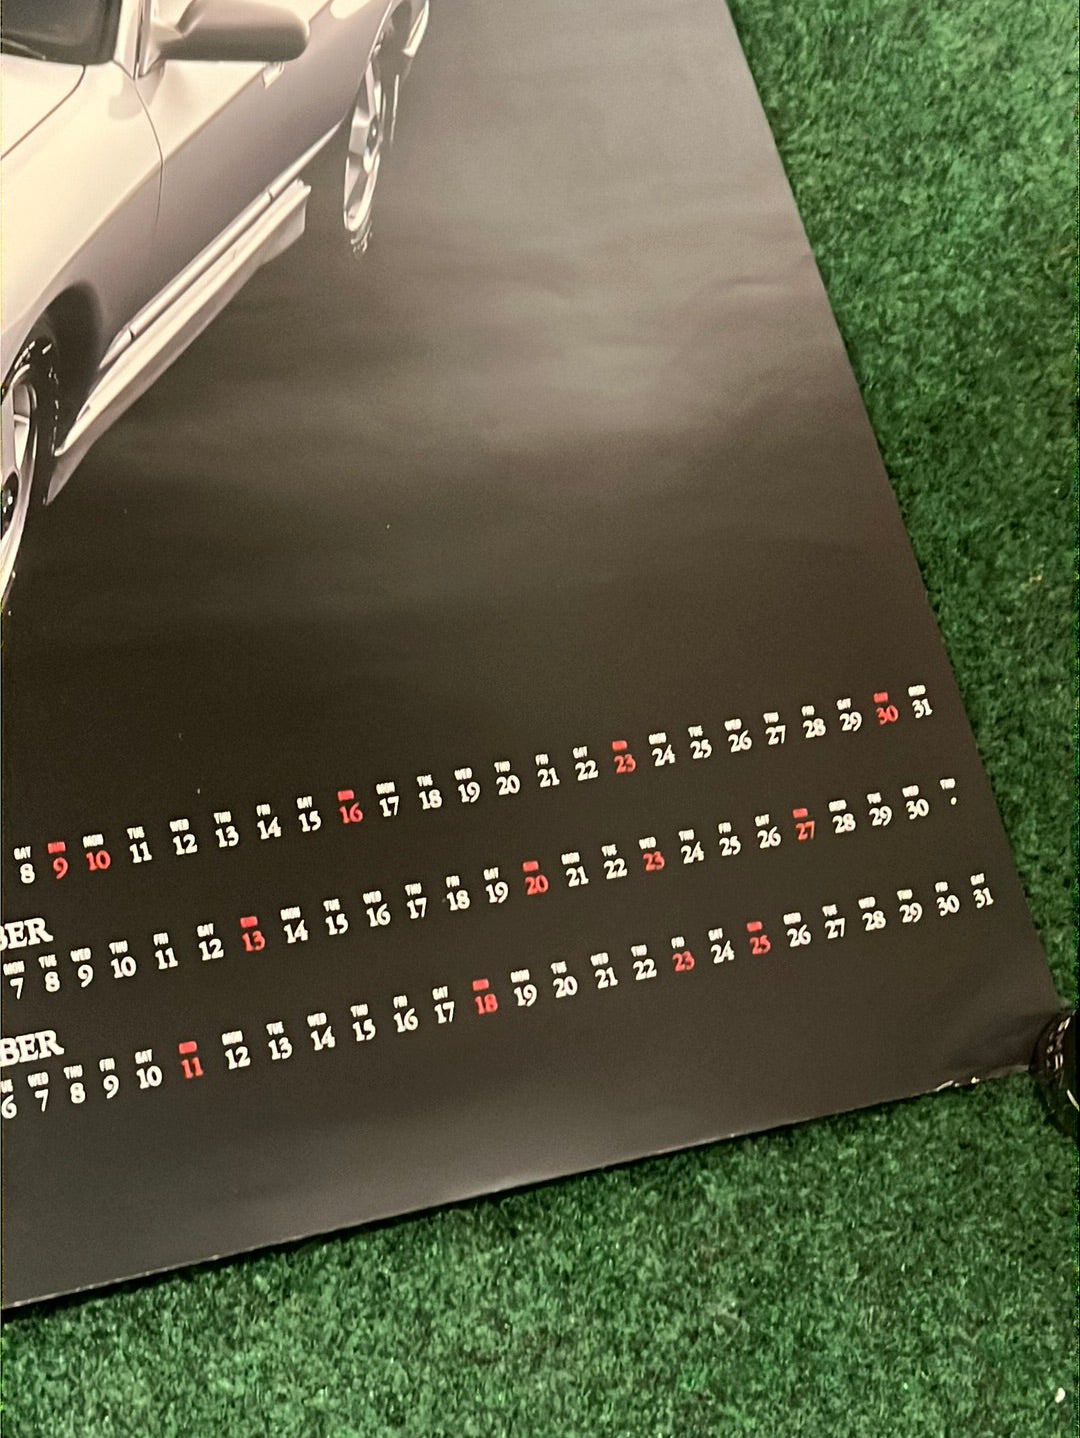 Impul - Nissan Skyline R32-R w/ Kazuyoshi Hoshino 1994 Calendar/Poster